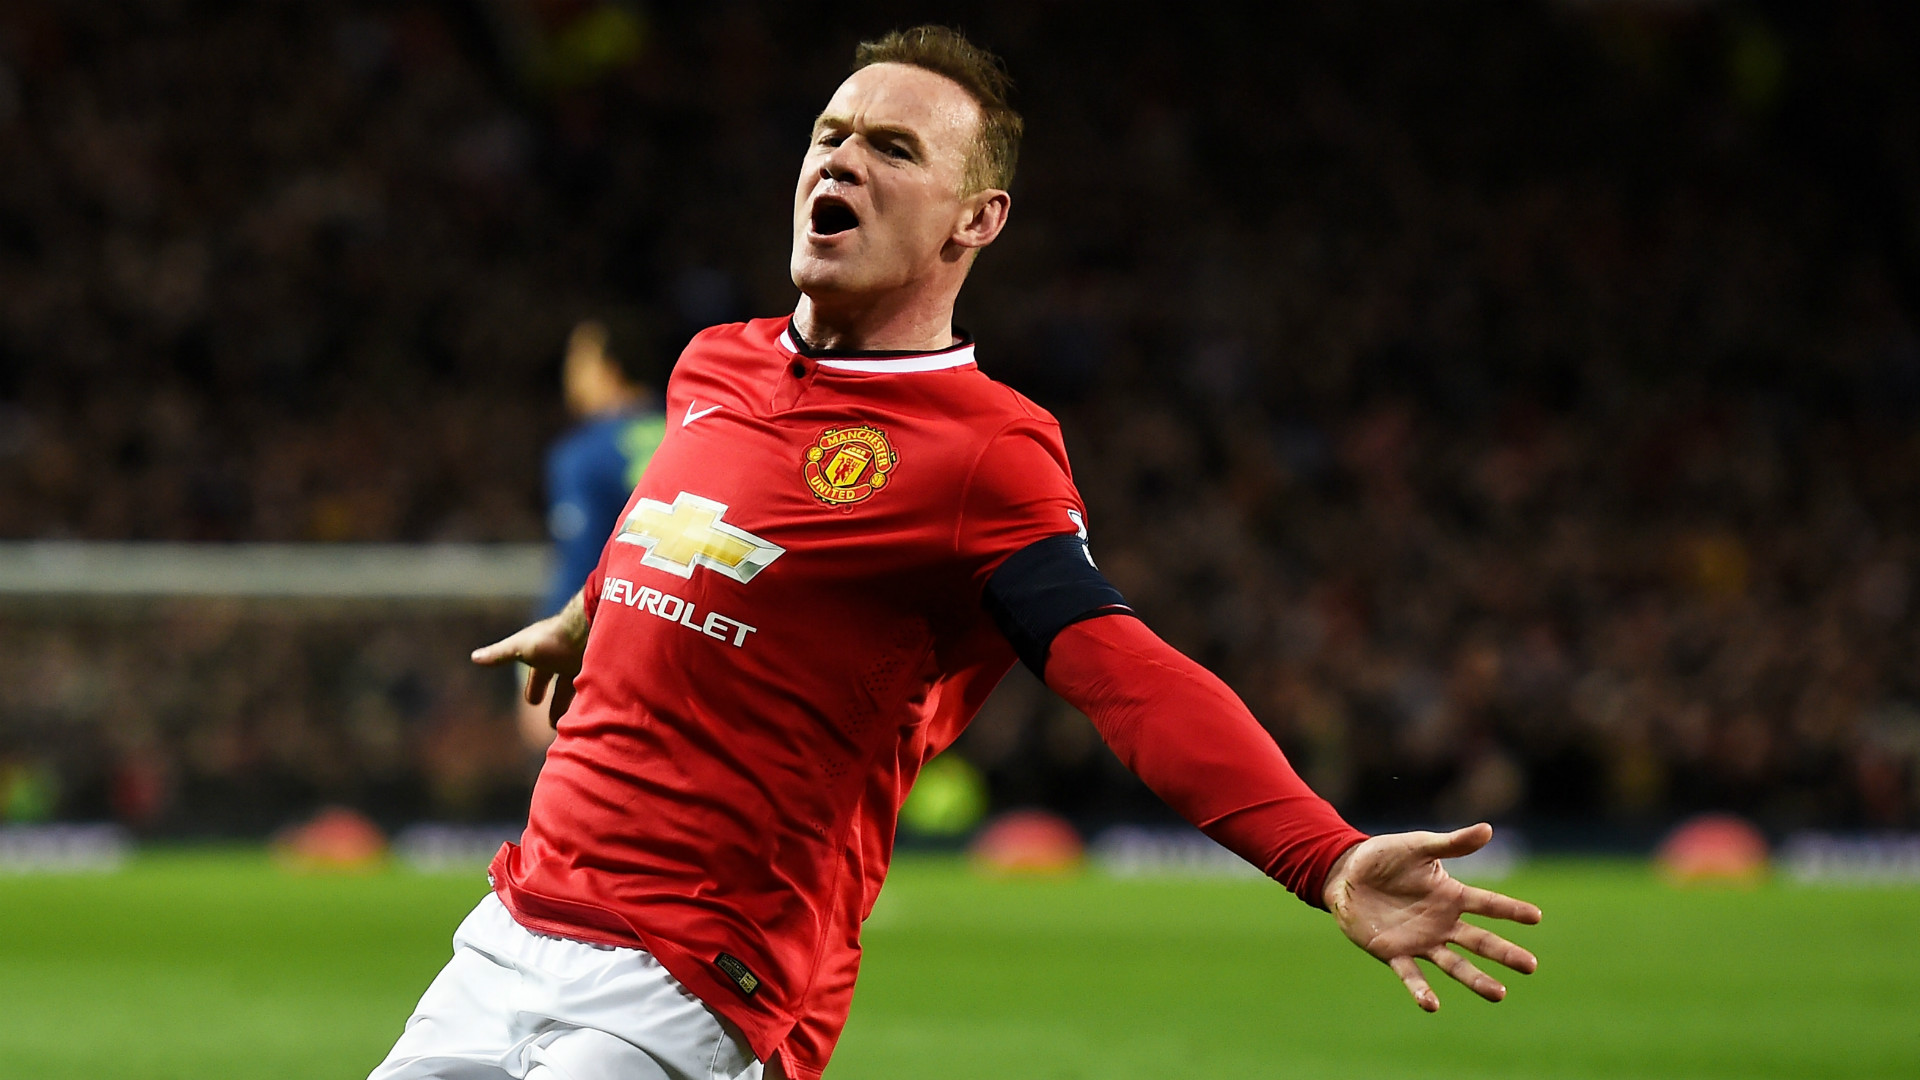 Derby County boss Wayne Rooney opens up on Manchester United struggles - Bóng Đá